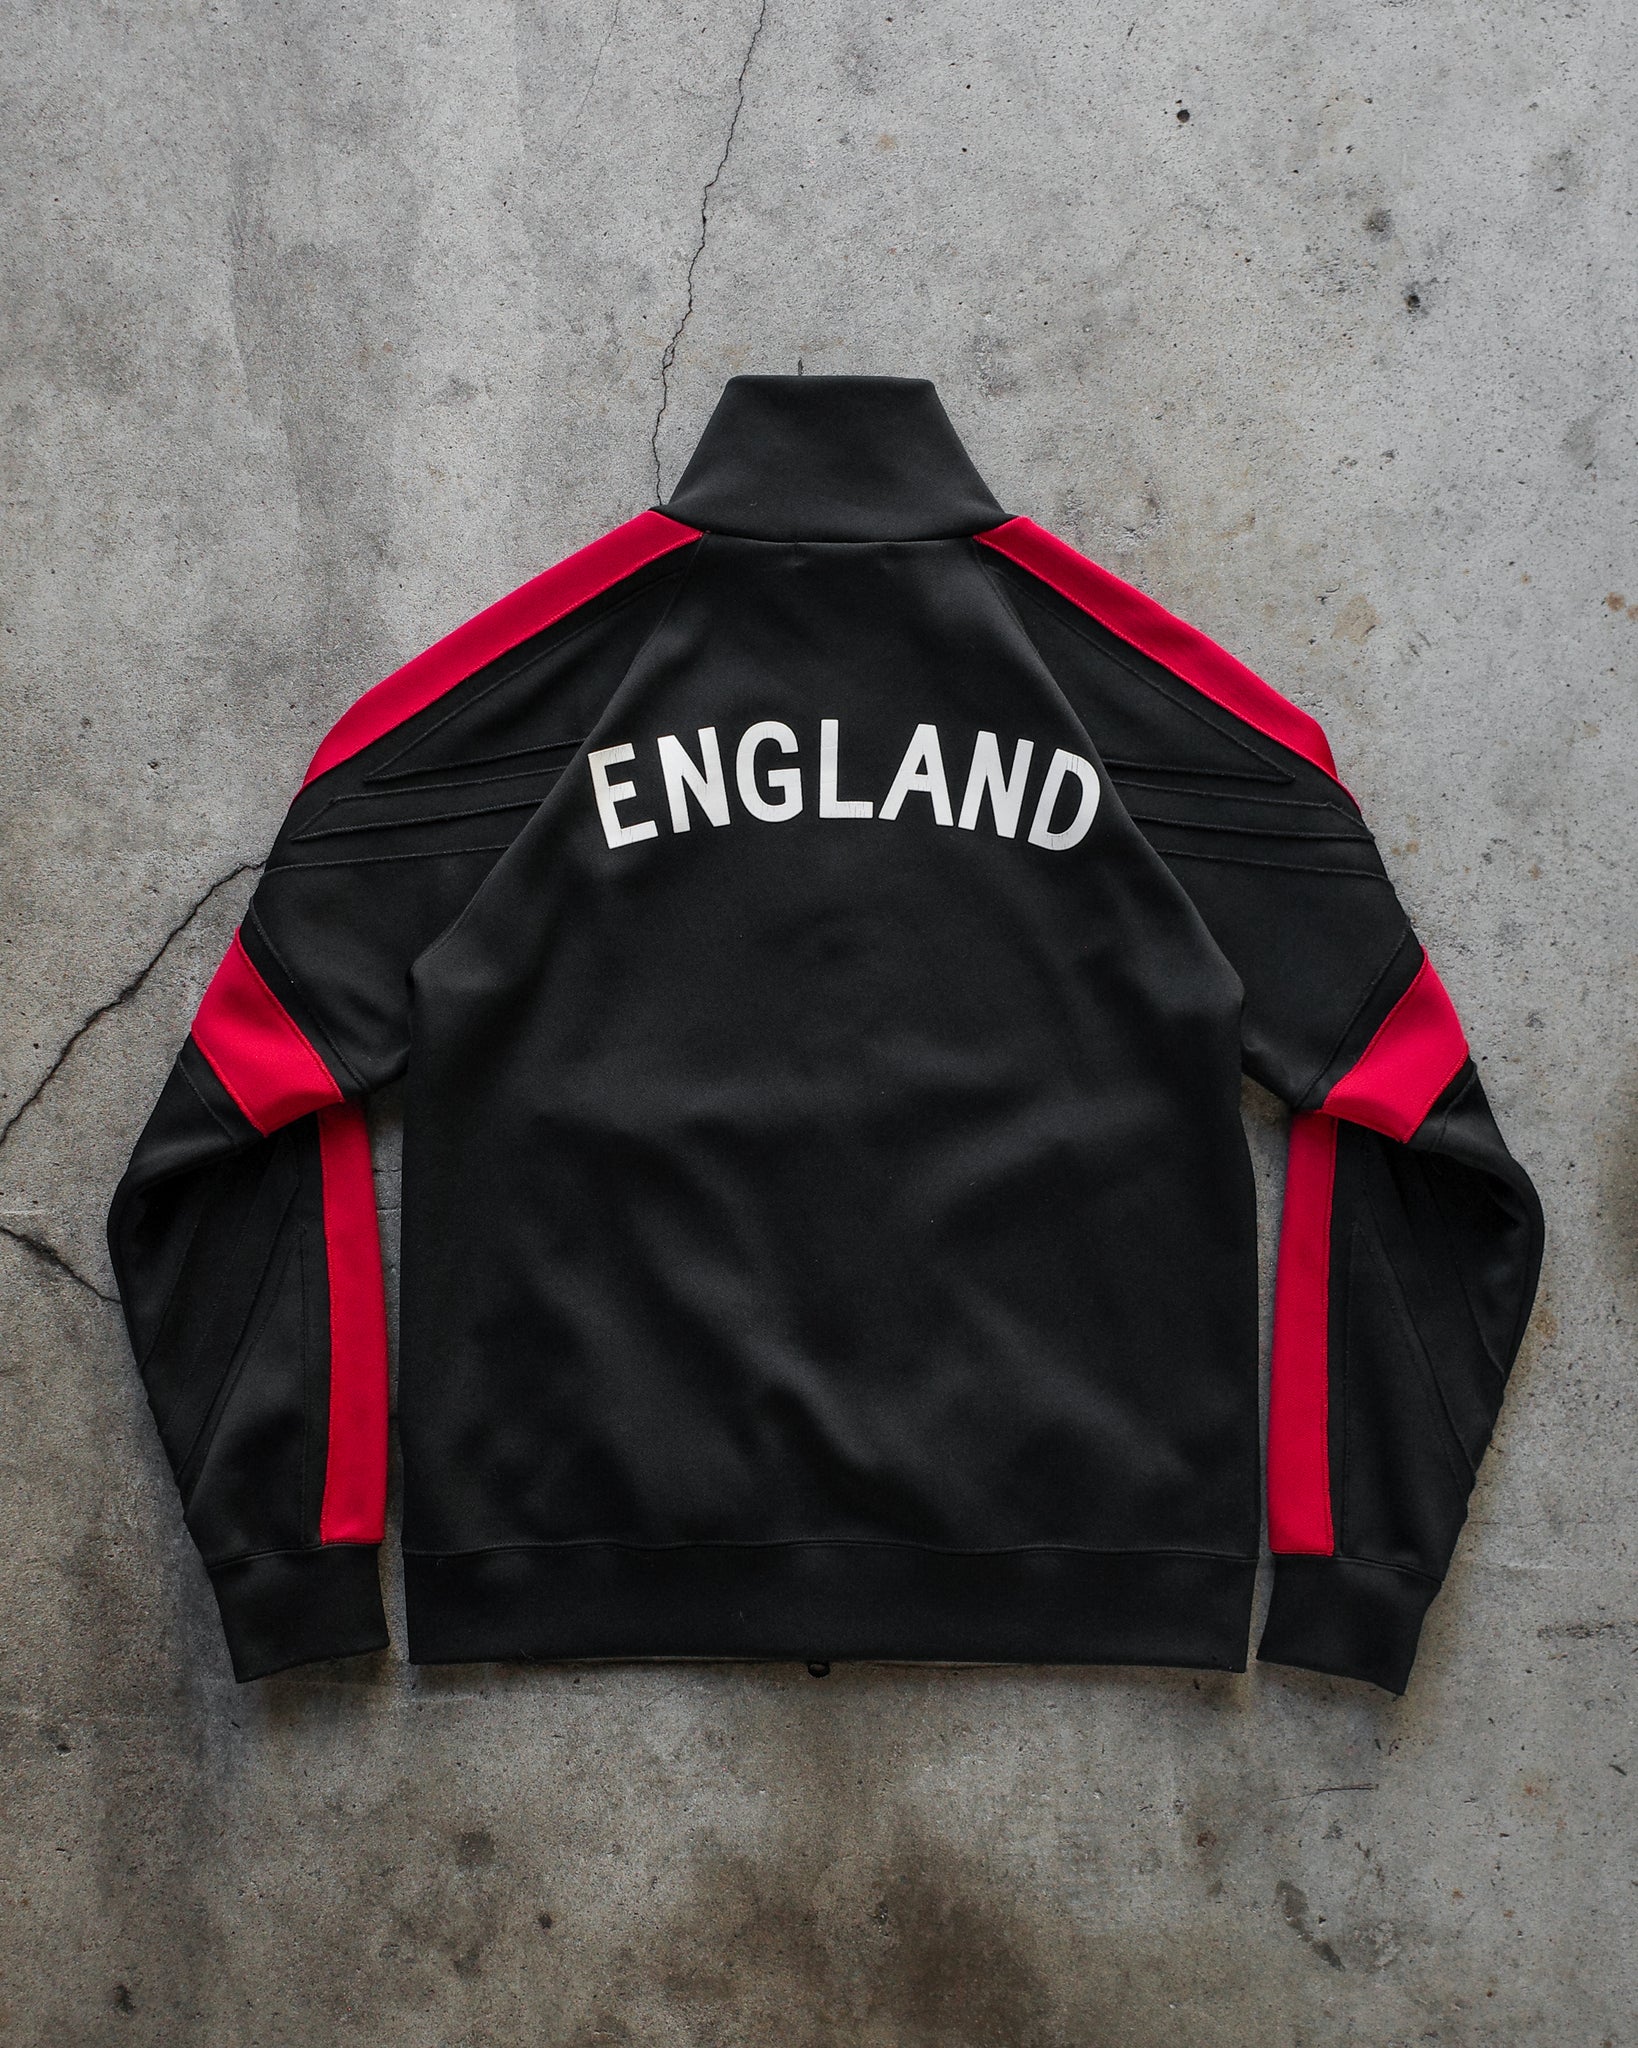 Edge Rupert "England" Track Jacket